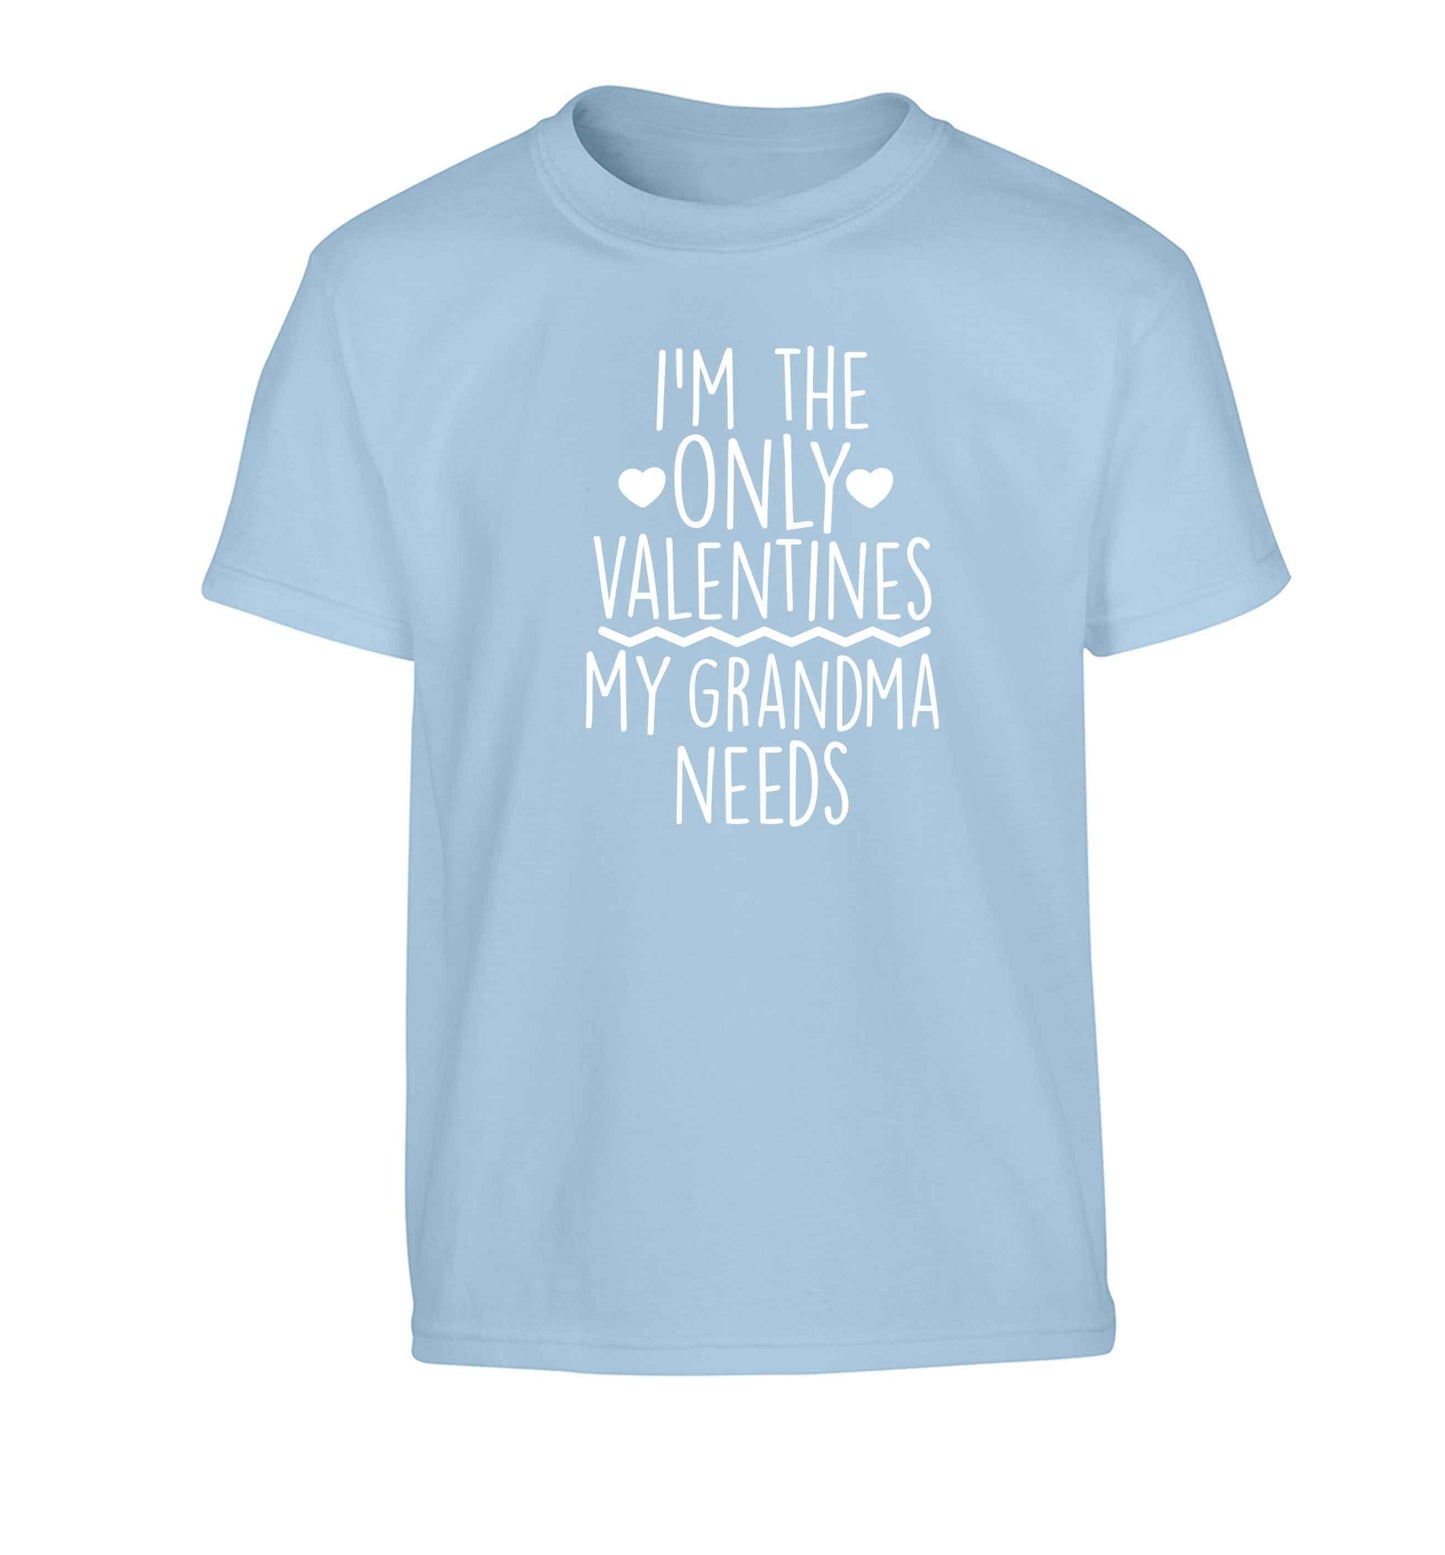 I'm the only valentines my grandma needs Children's light blue Tshirt 12-13 Years